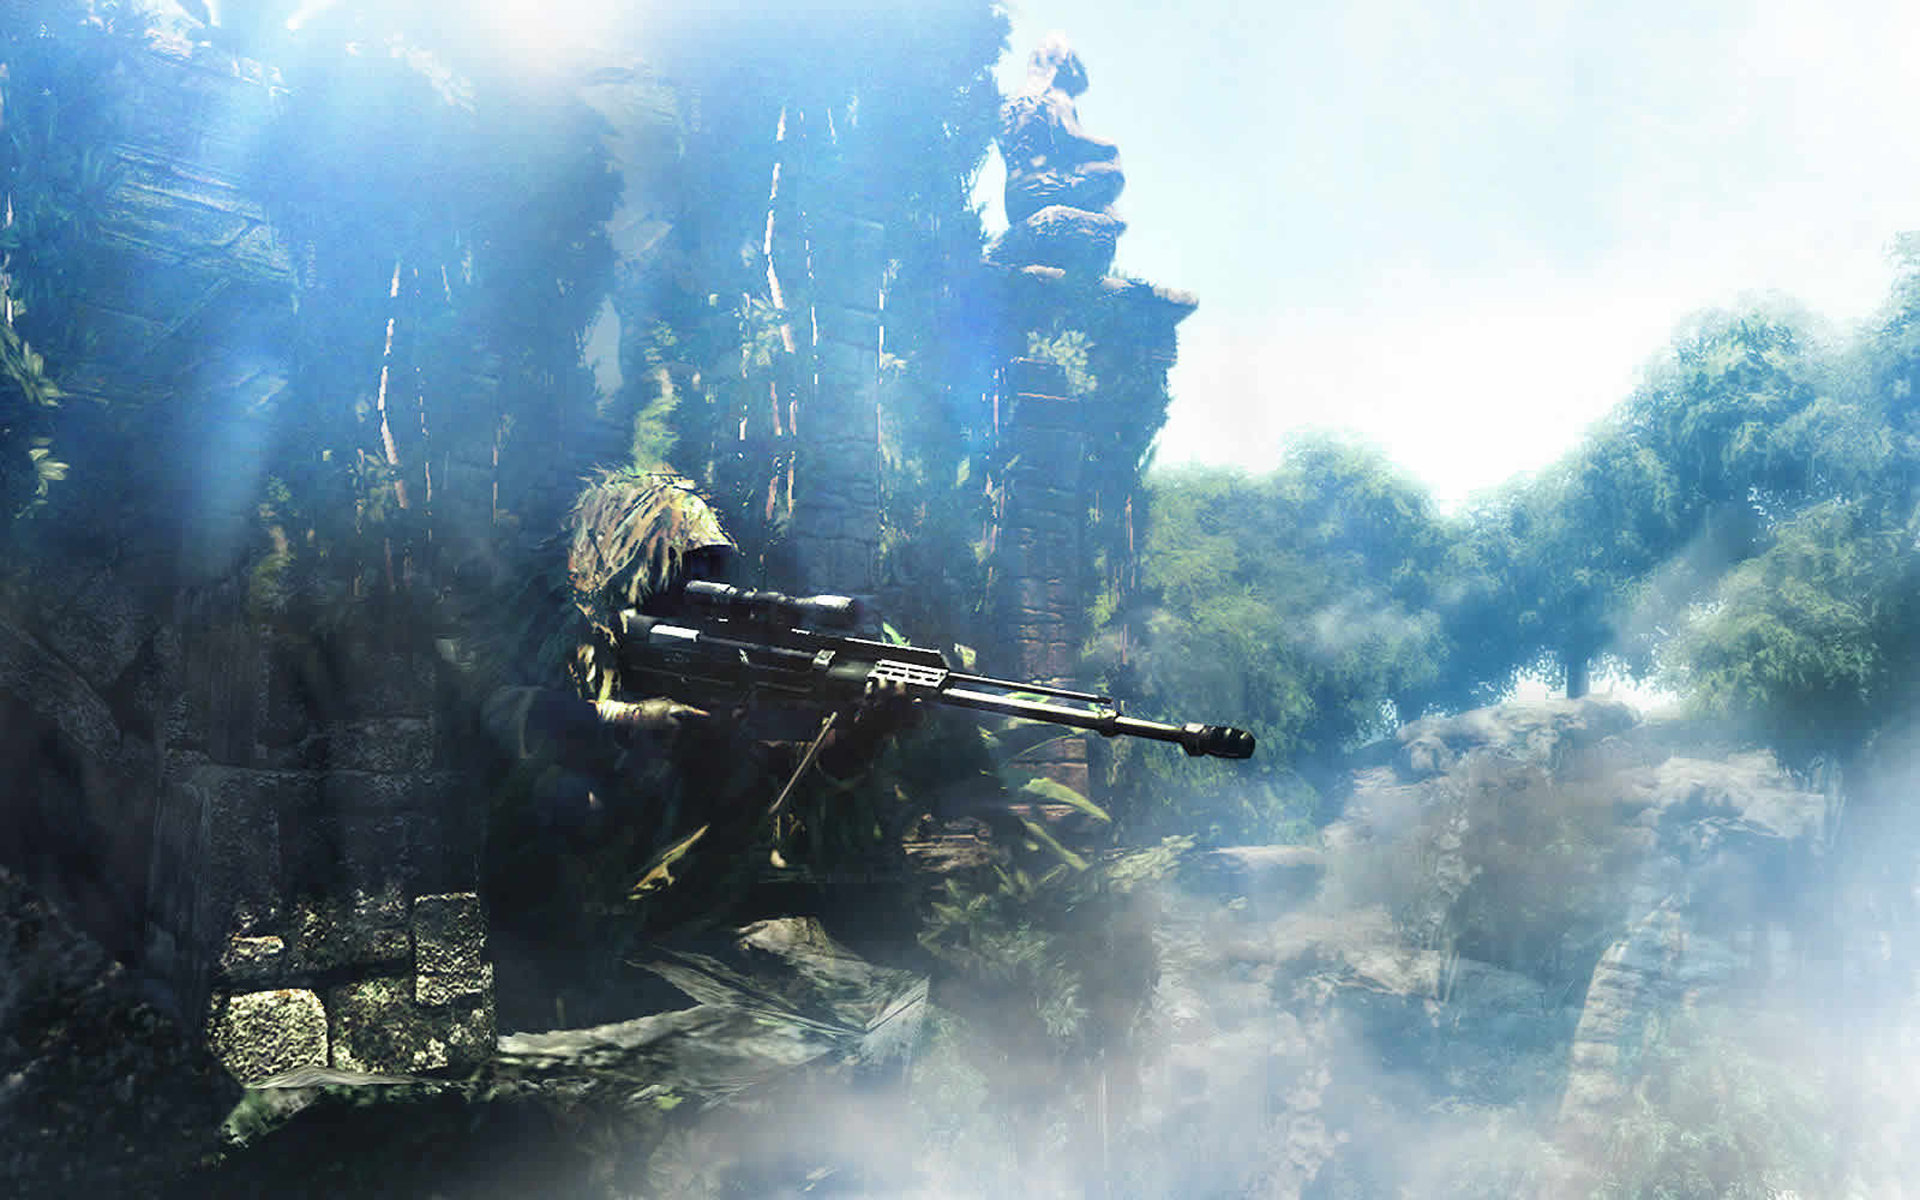 Sniper: Ghost Warrior wallpaper HD for desktop background